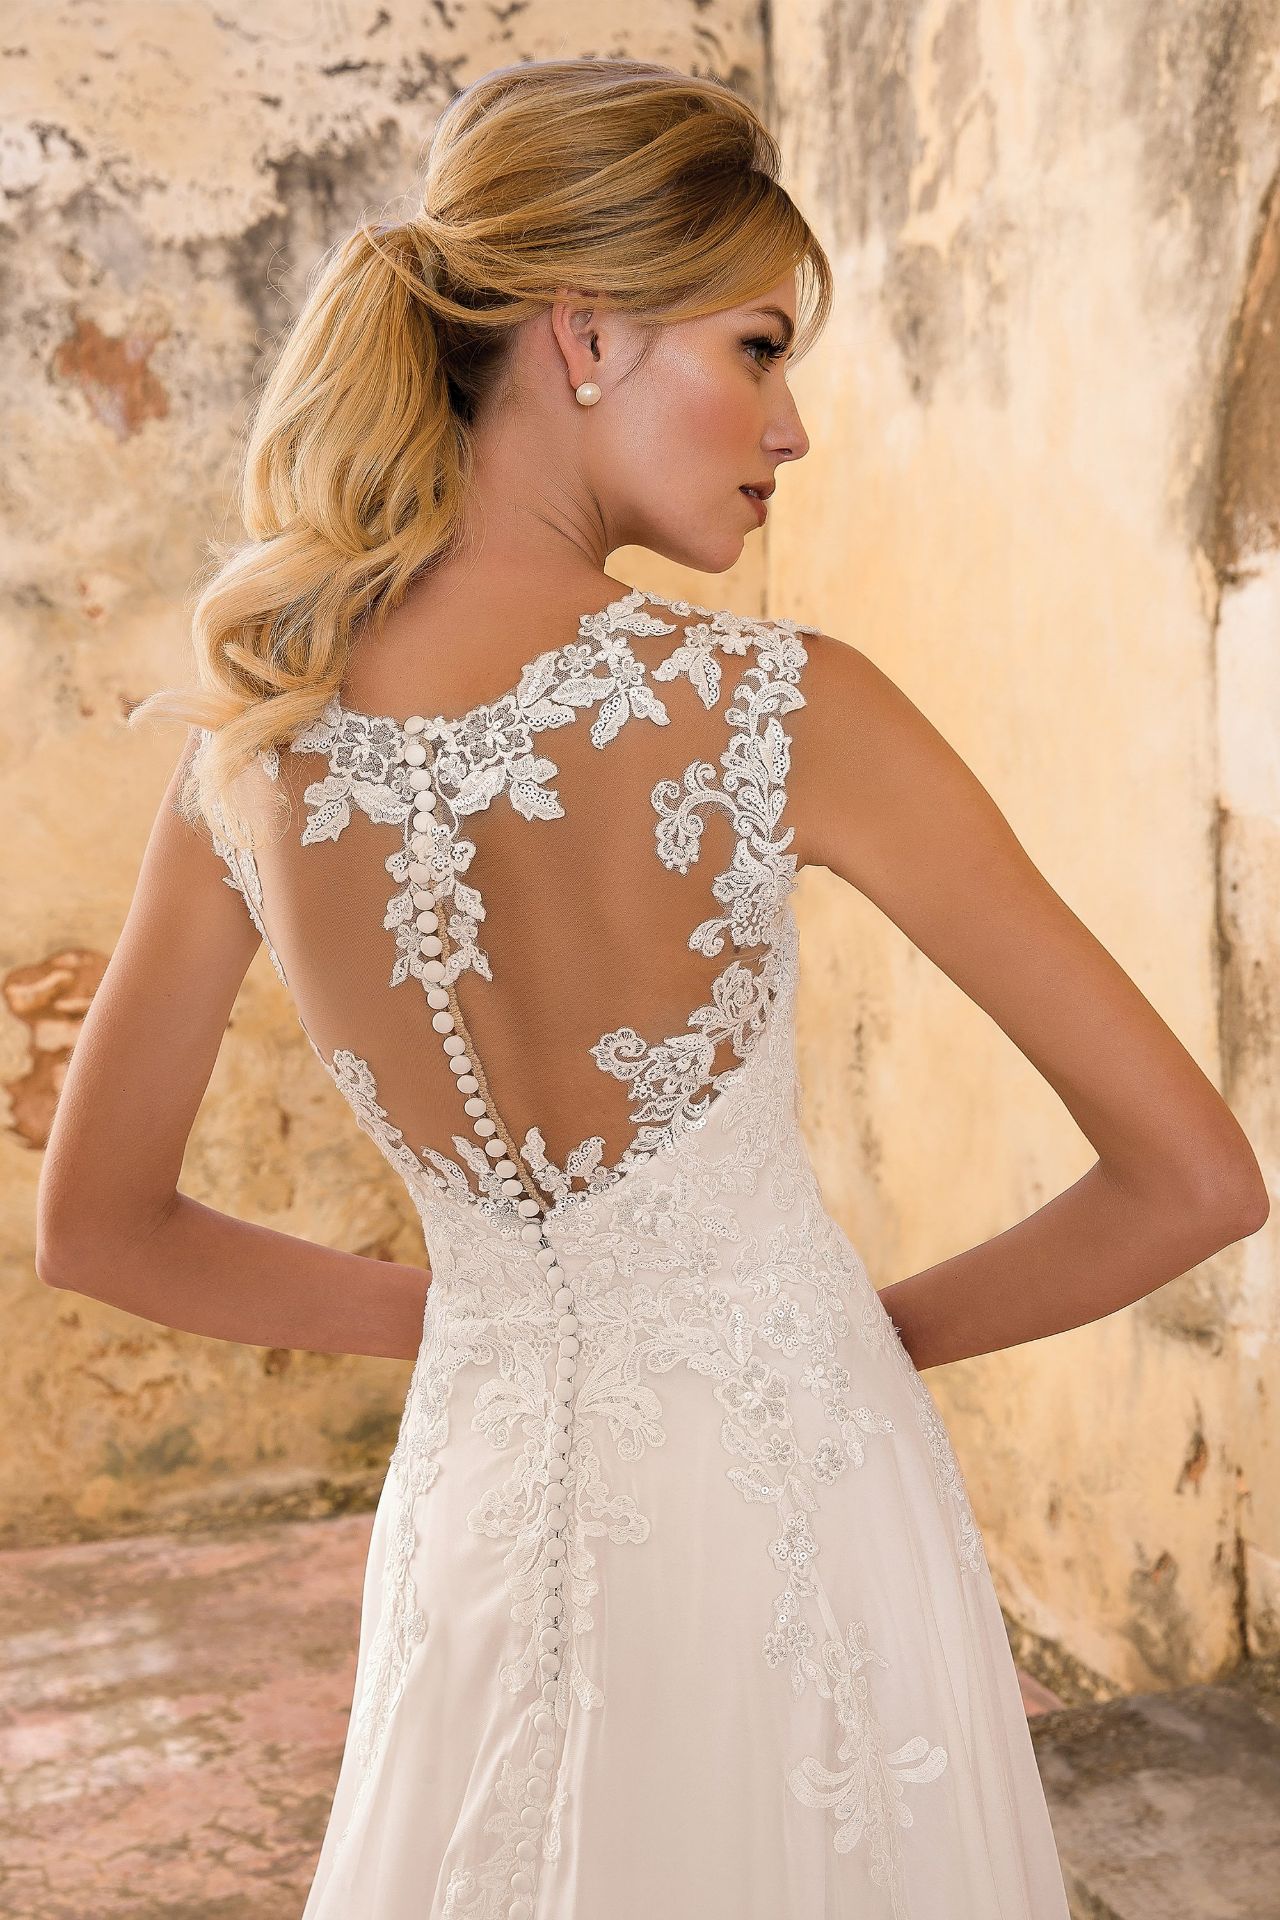 1 x Justin Alexander Designer Beaded Venice Lace A-line Wedding Bridal Dress - Size 16 - RRP £1,545 - Image 4 of 6